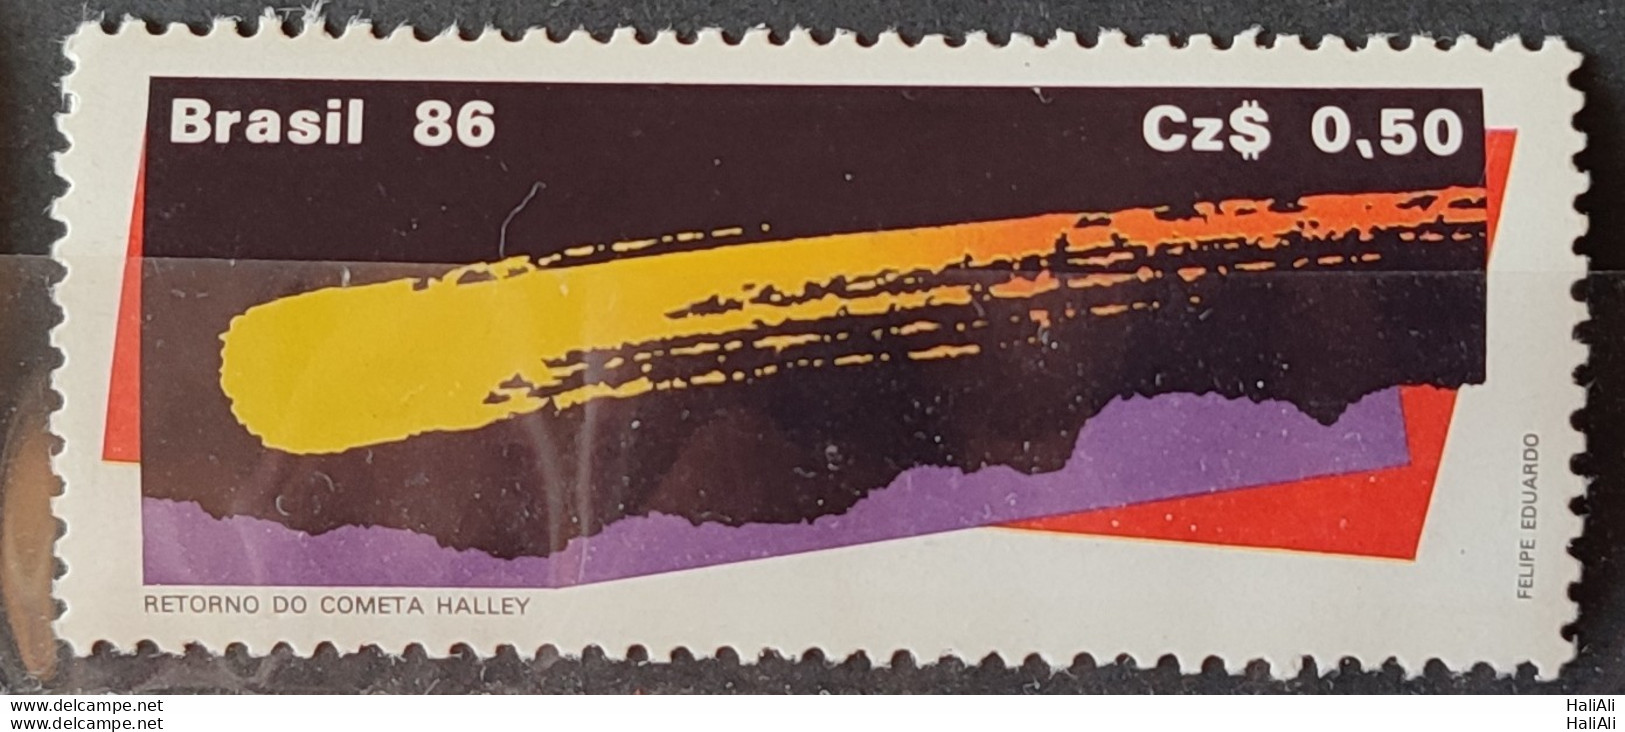 C 1507 Brazil Stamp Comet Halley Astronomy 1986.jpg - Nuevos